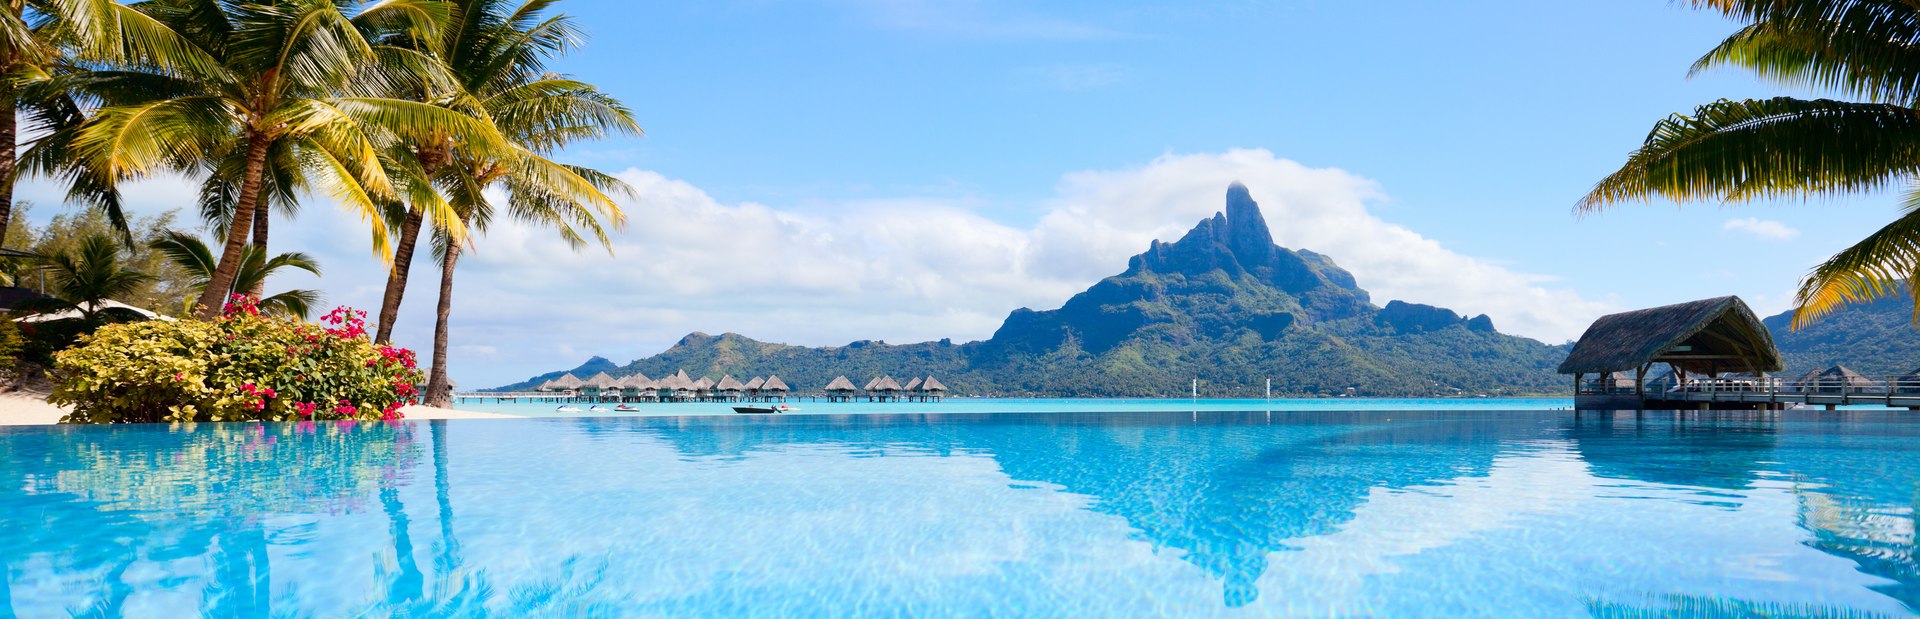 Four Seasons Resort Bora Bora Image 1